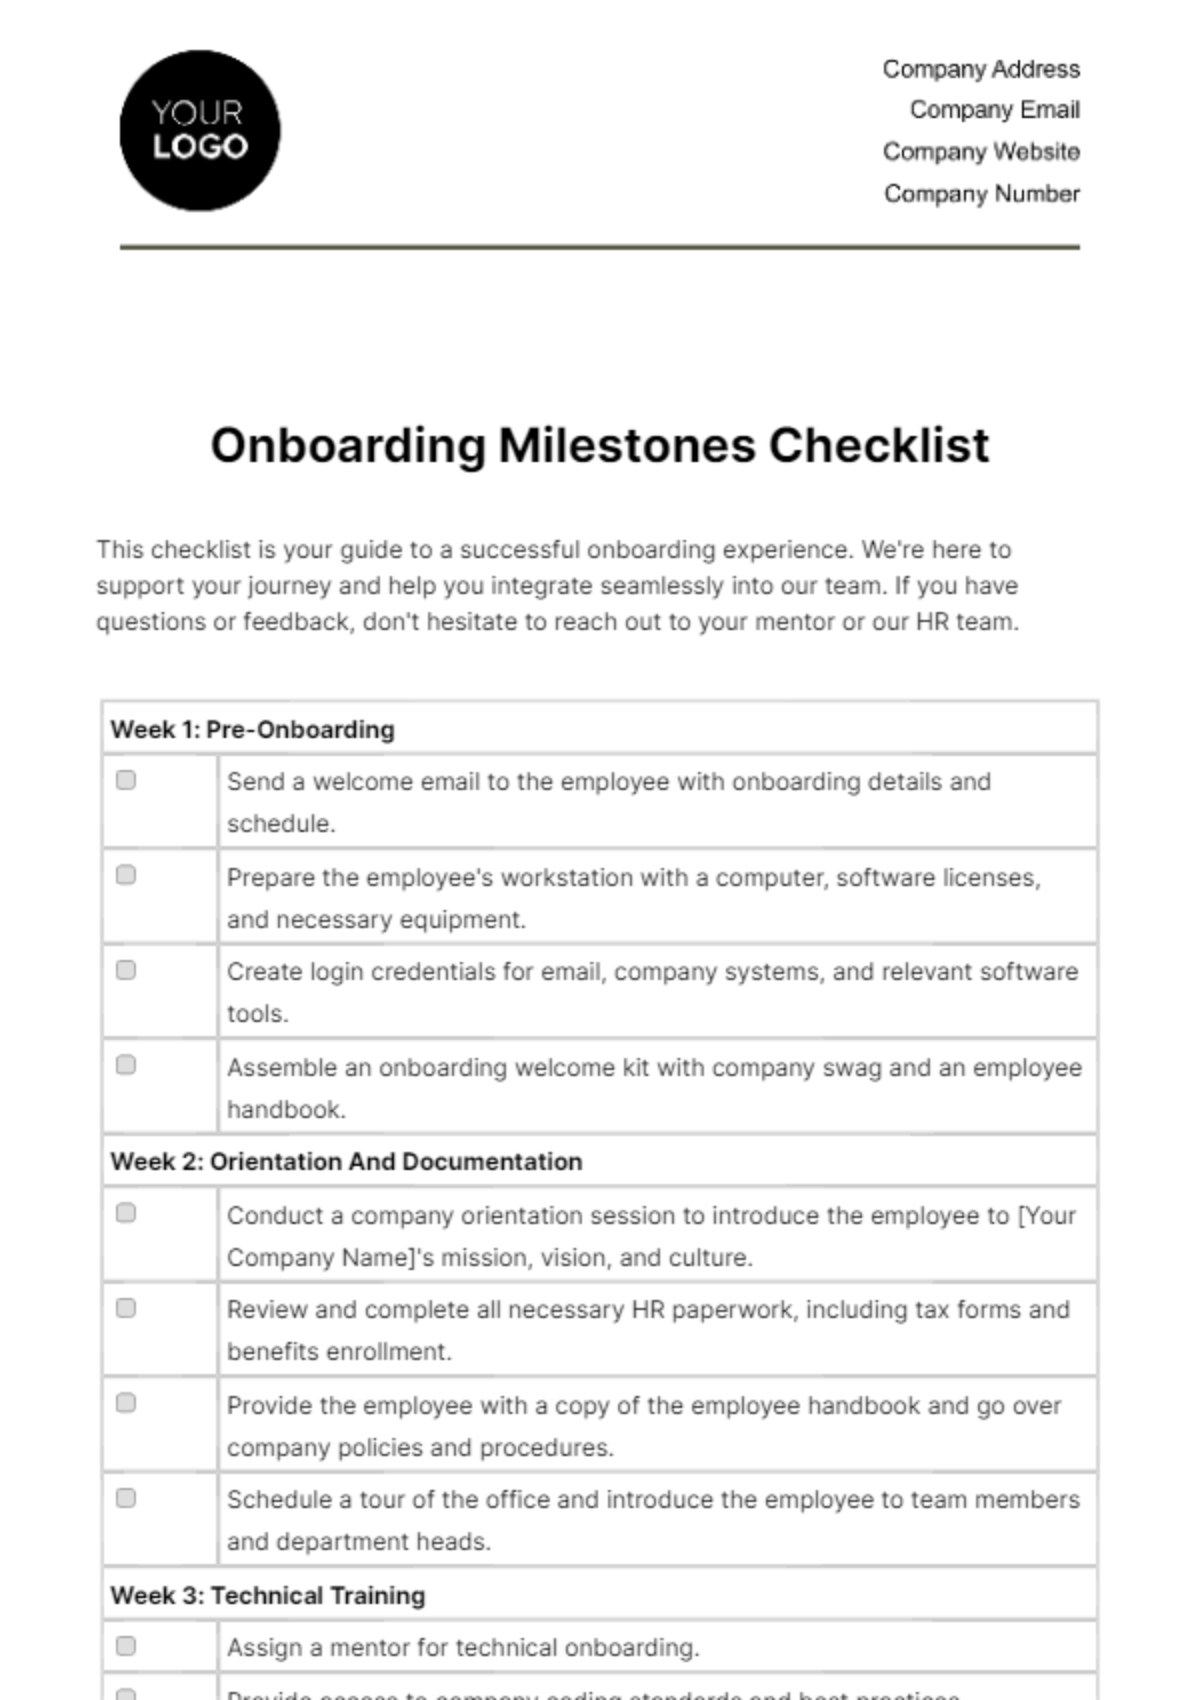 Free Onboarding Milestones Checklist HR Template